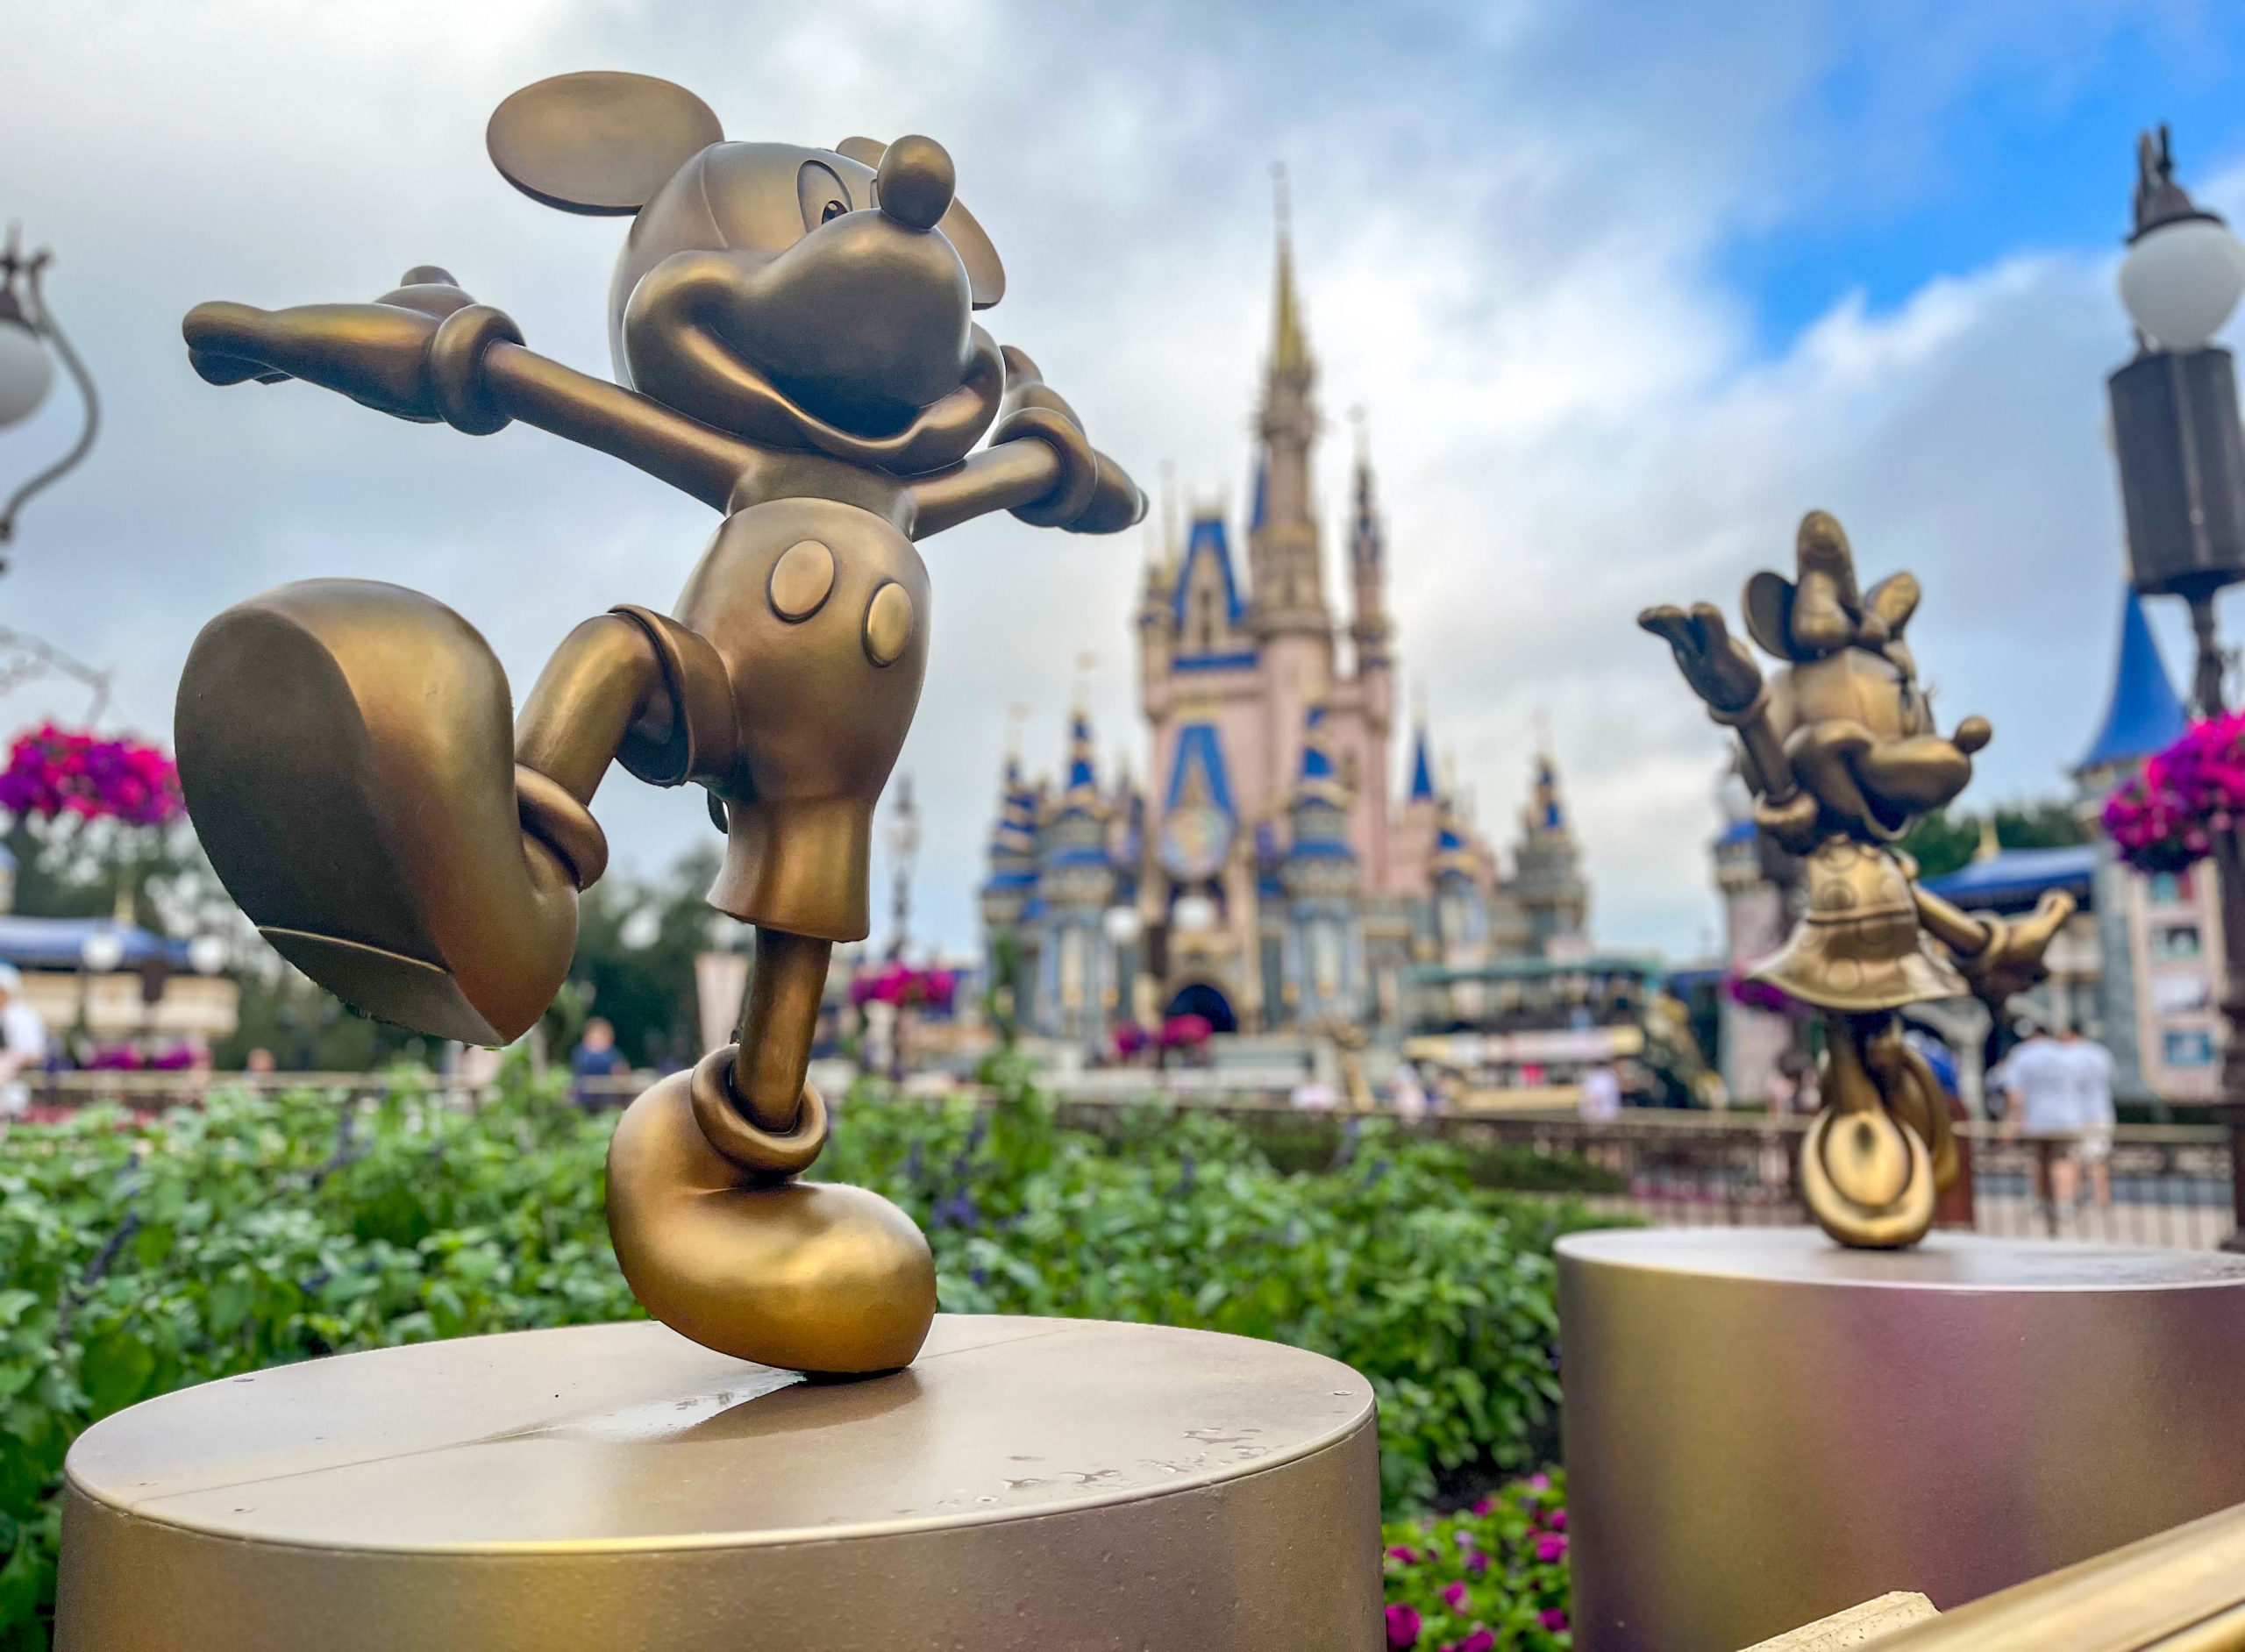 Gold Mickey statue